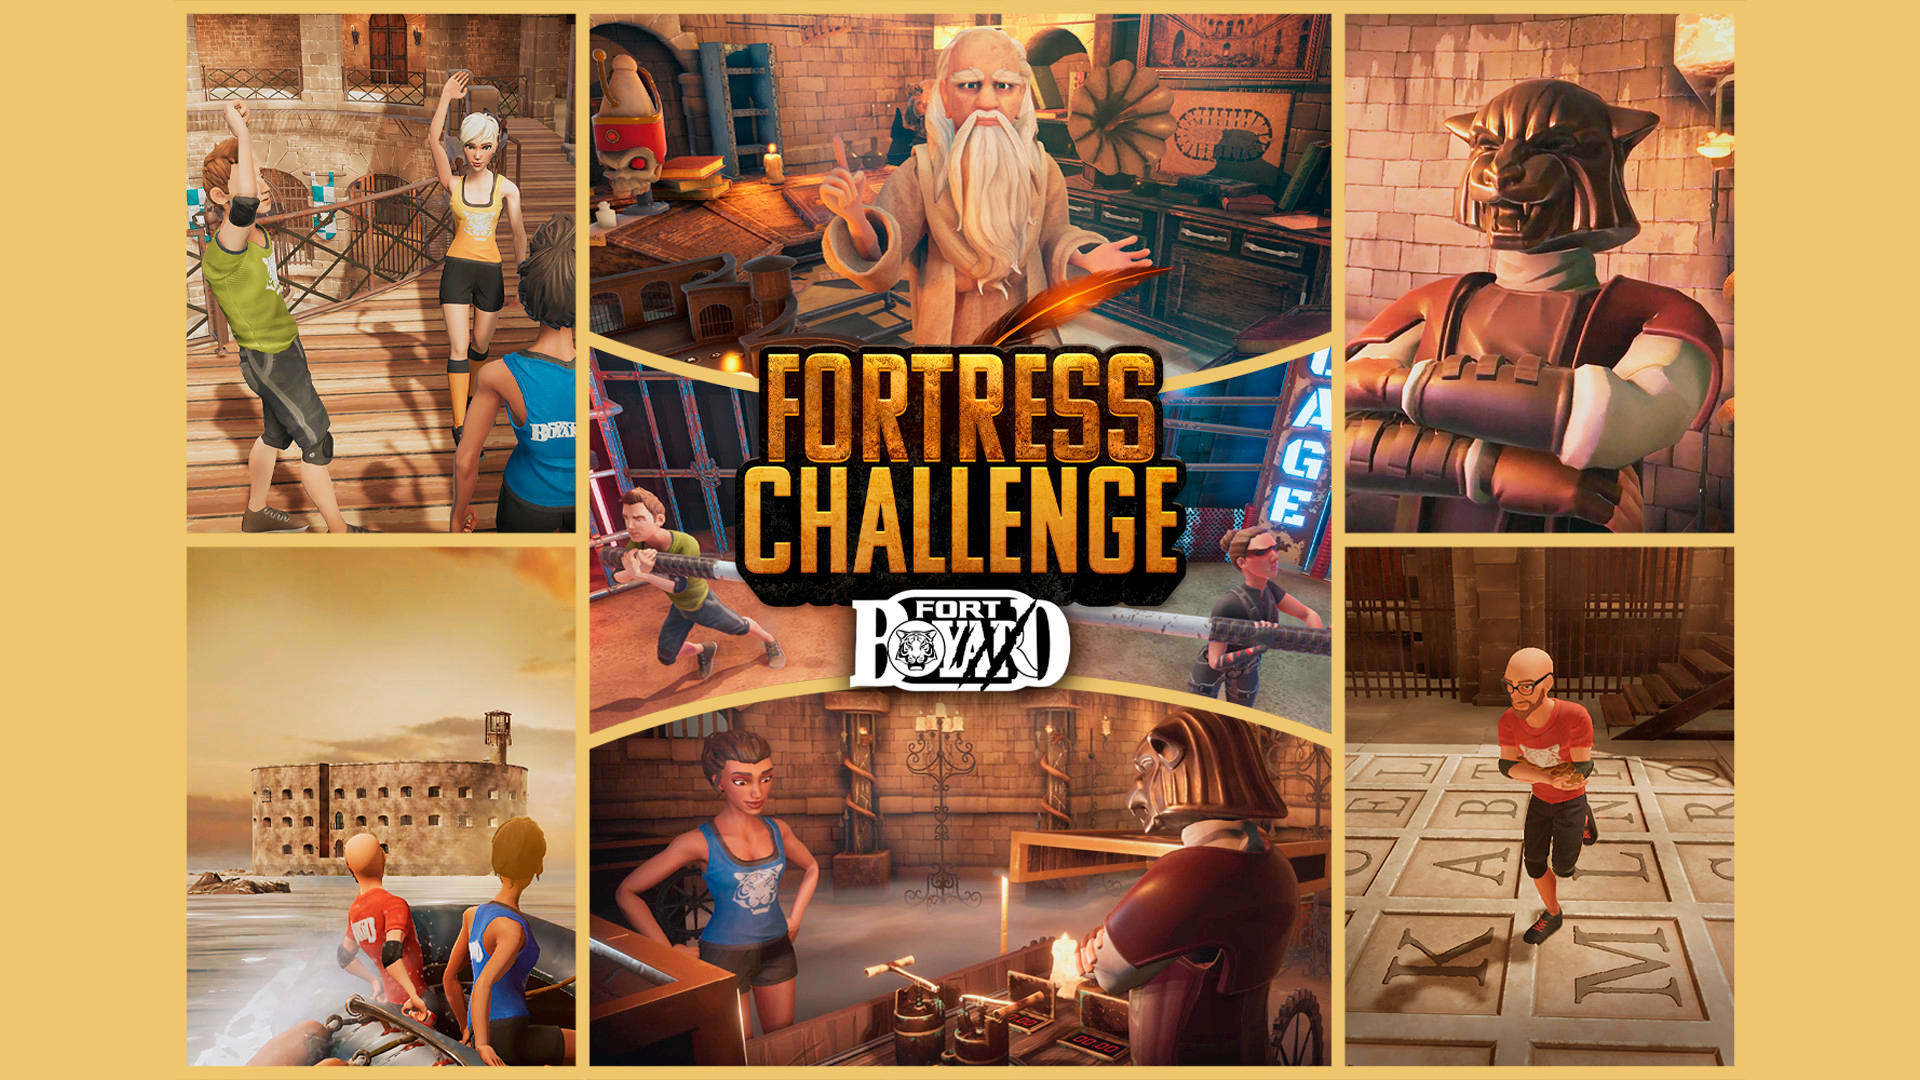 Fortress Challenge - Fort Boyard 1